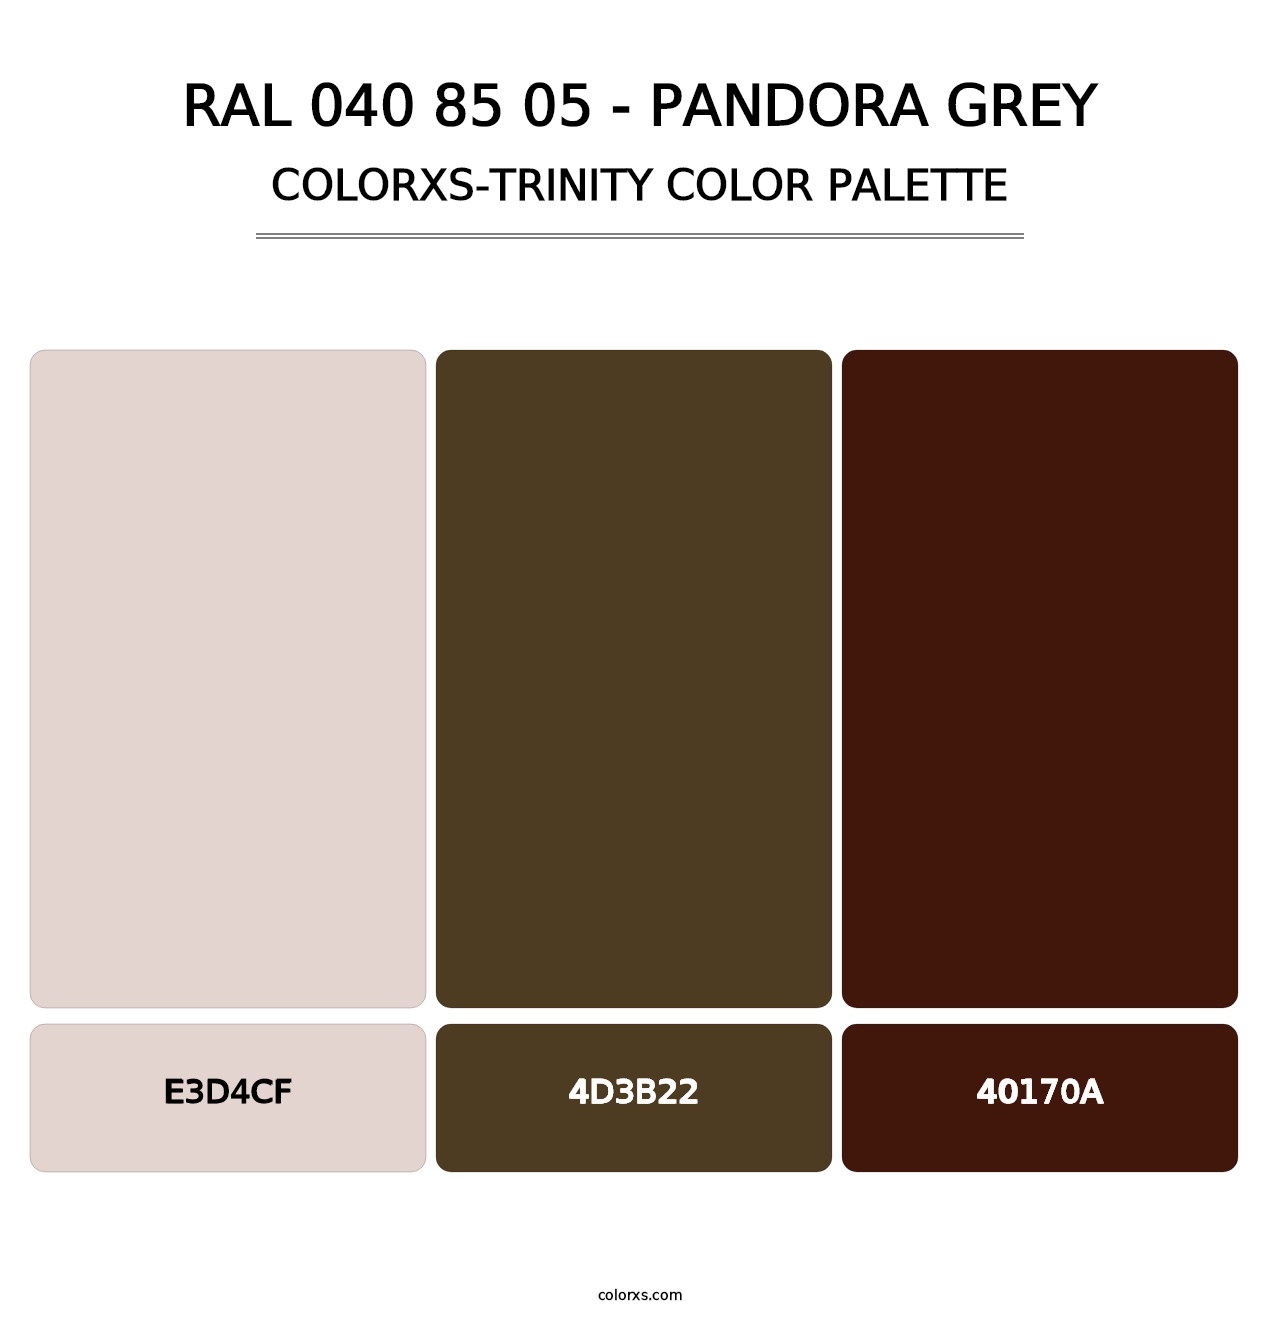 RAL 040 85 05 - Pandora Grey - Colorxs Trinity Palette